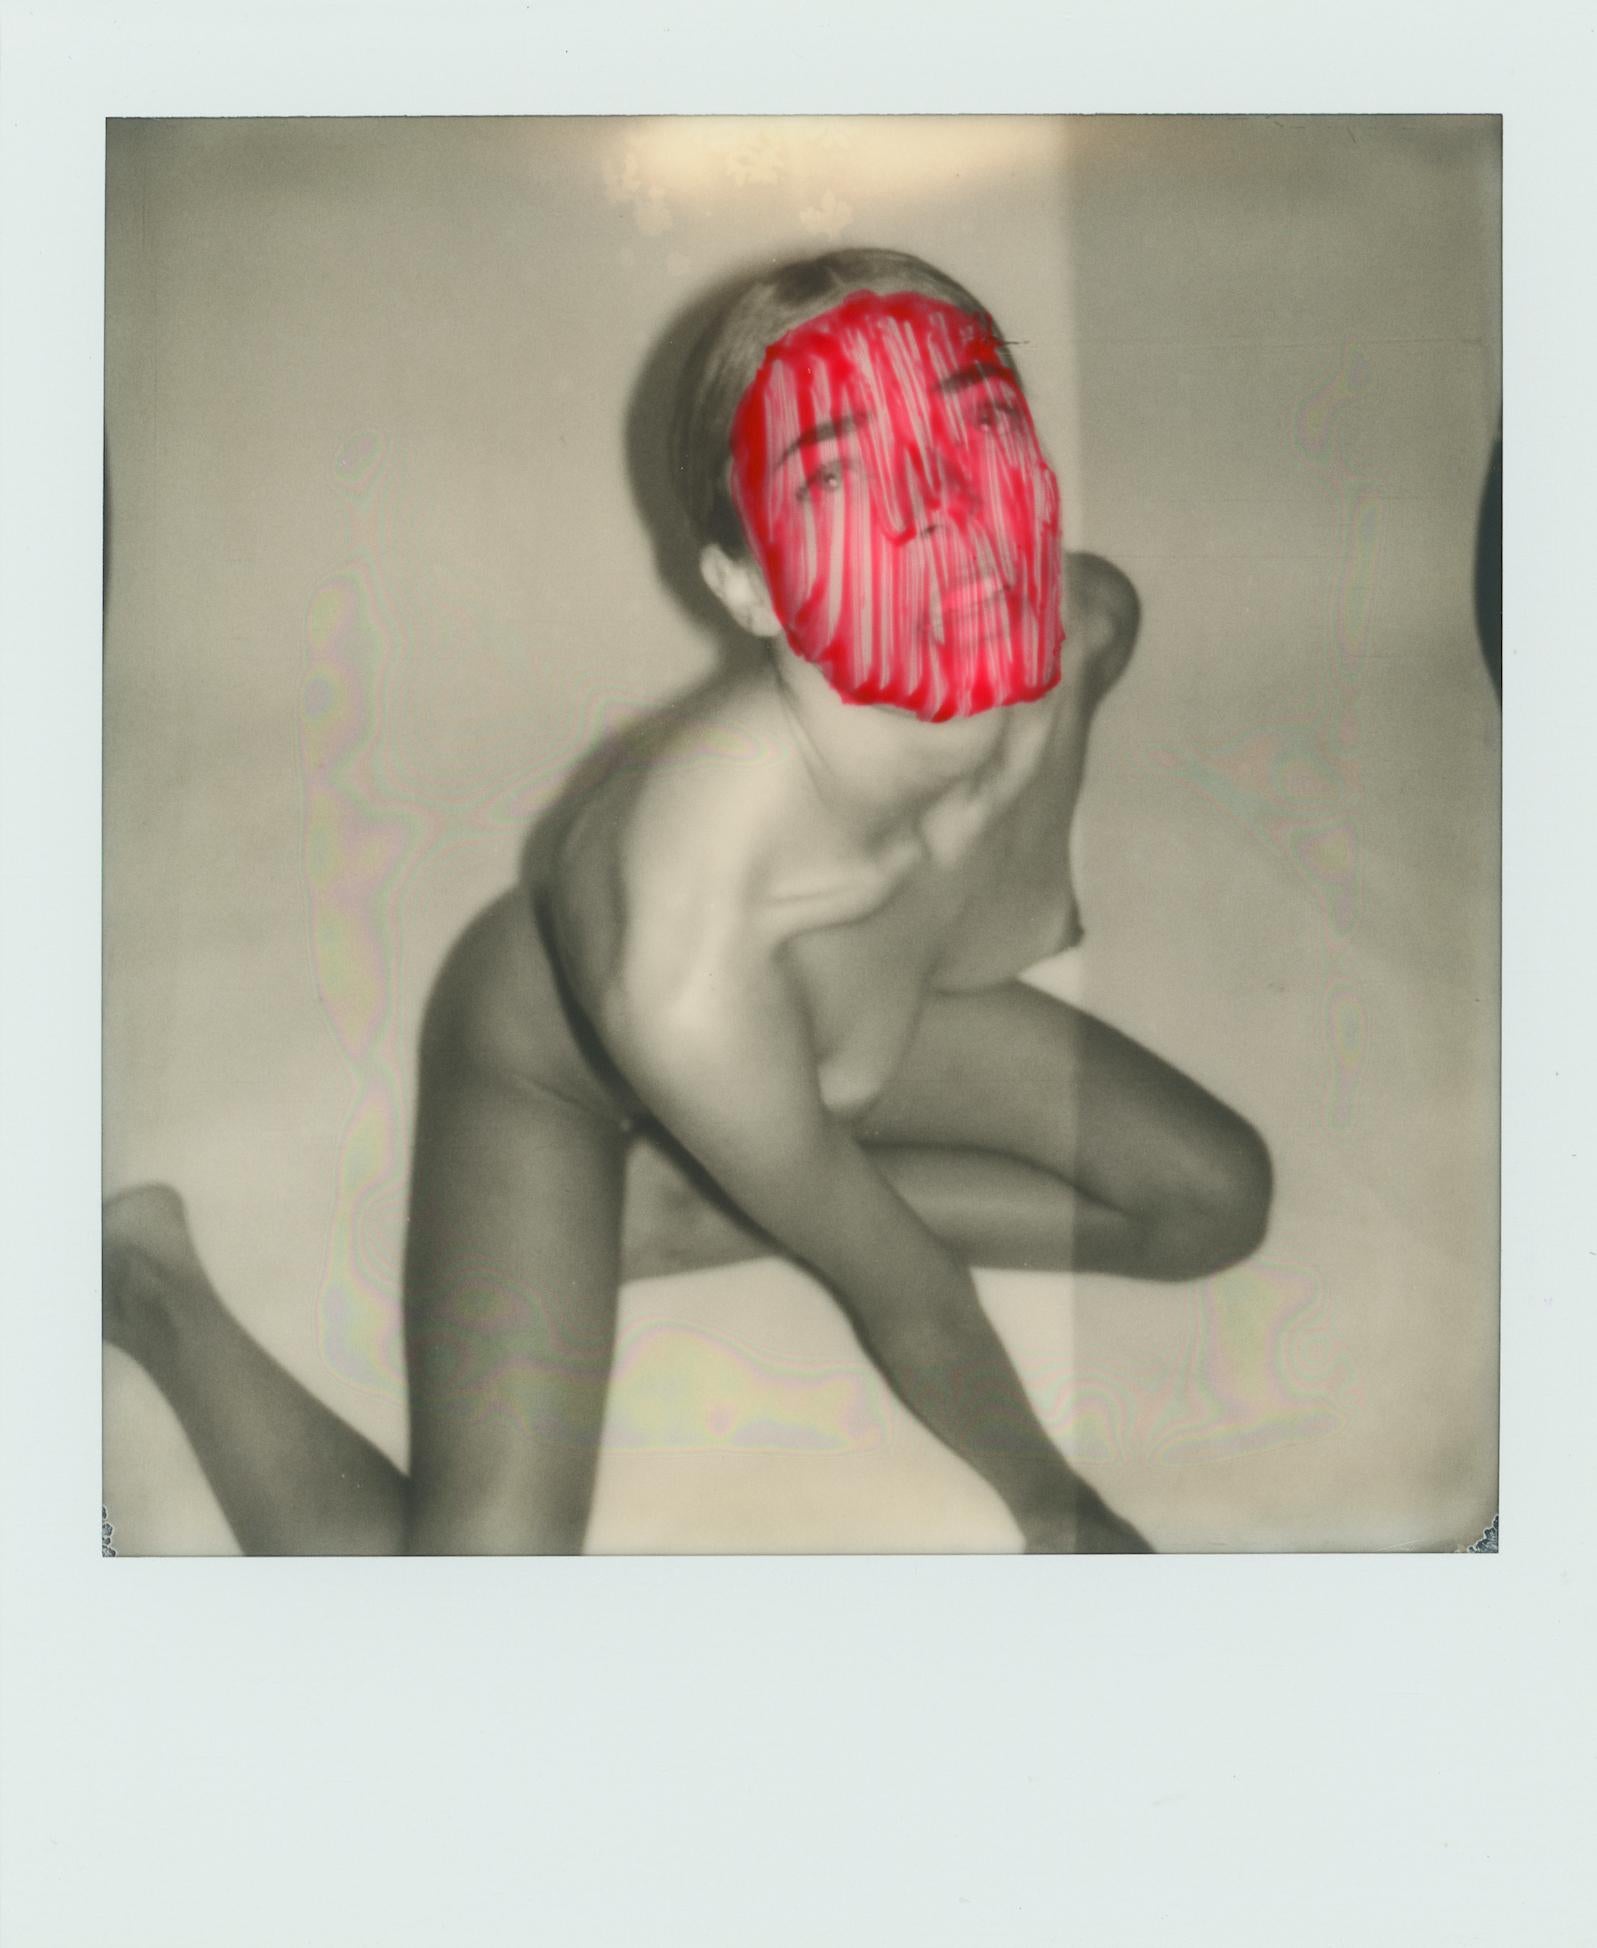 "Pola Girls 17" Original Polaroid / Unique piece by Larsen Sotelo 